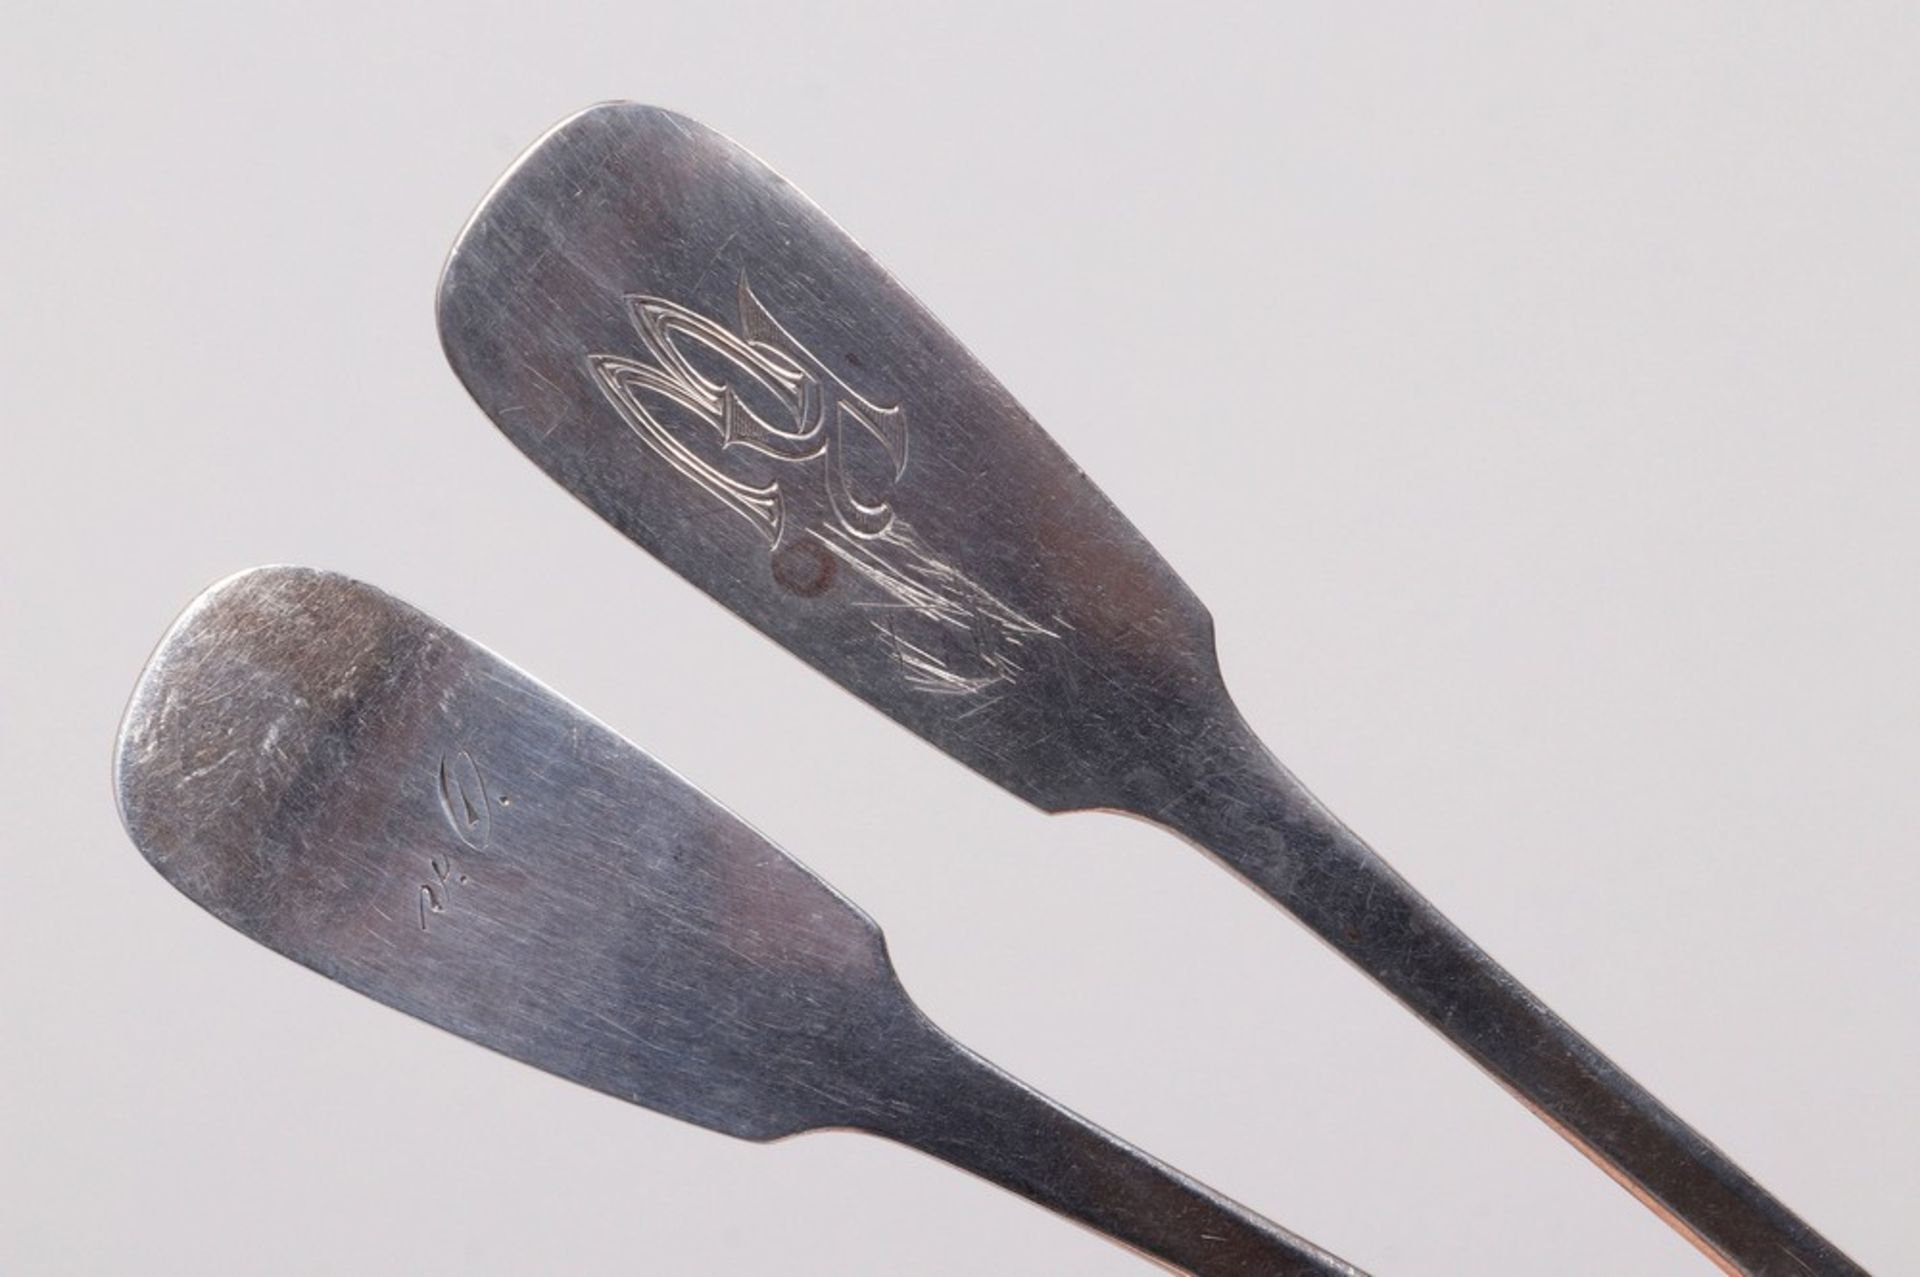 3 spoons, silver, Albert Picht et al., Berlin/Danzig, 18th/19th C. - Image 2 of 3